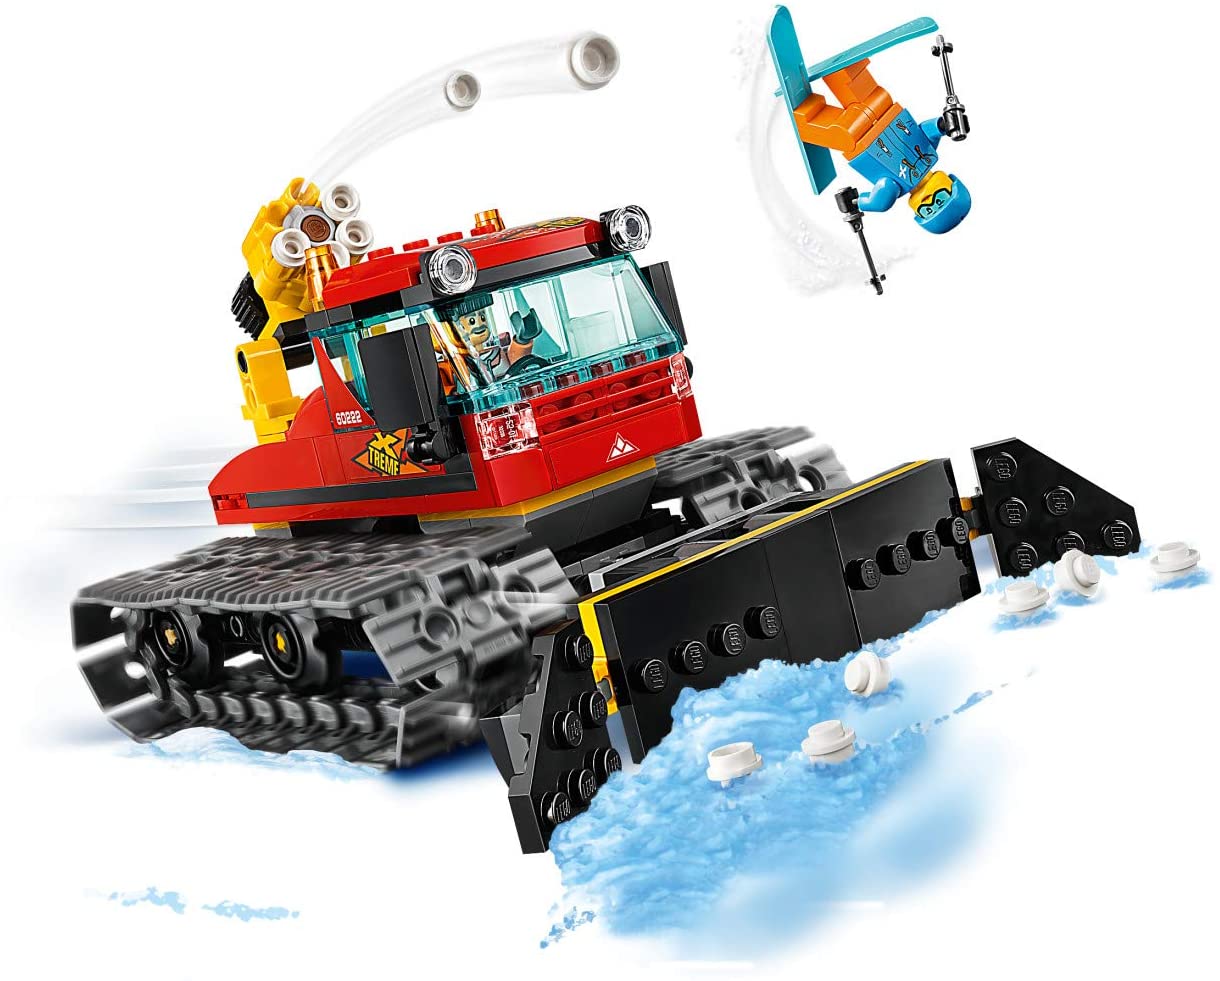 Great Vehicles Snow Groomer, 60222 | LEGO® City